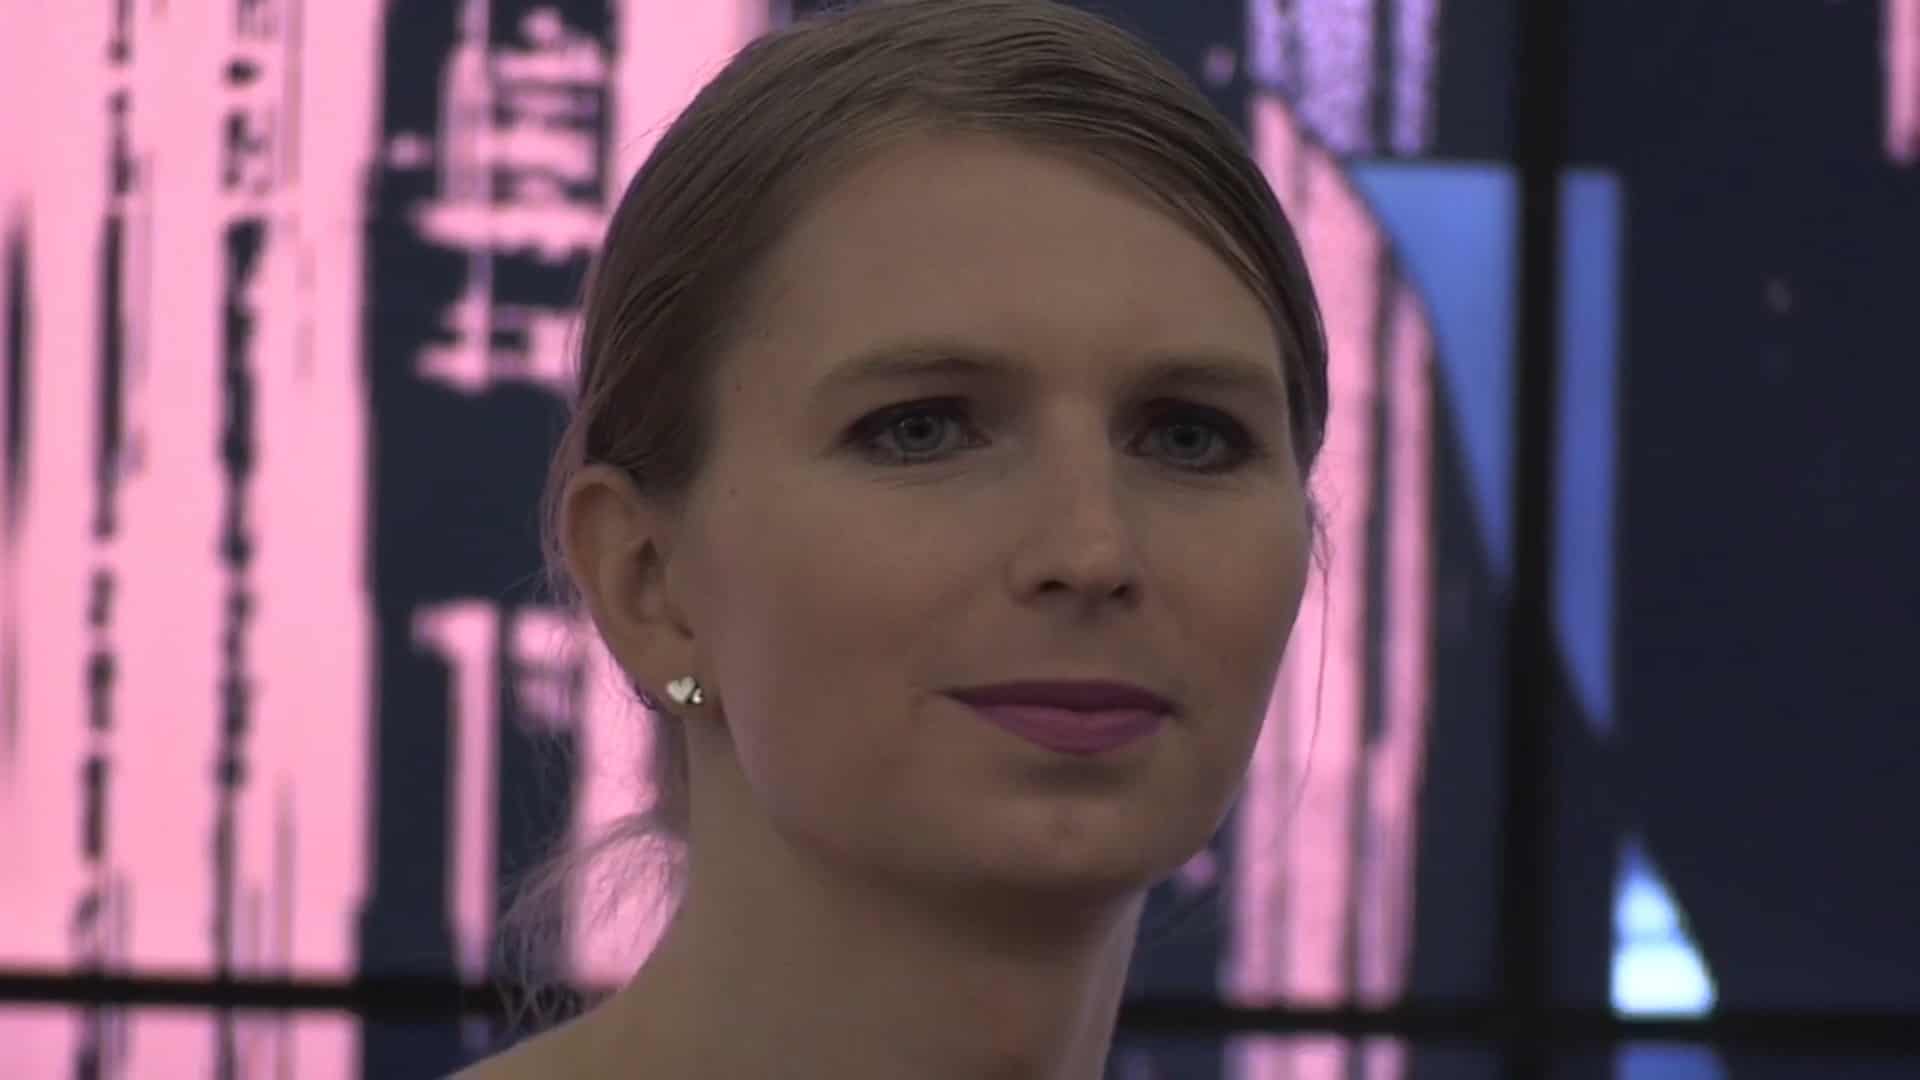 US judge orders release of WikiLeaks whistleblower Chelsea Manning